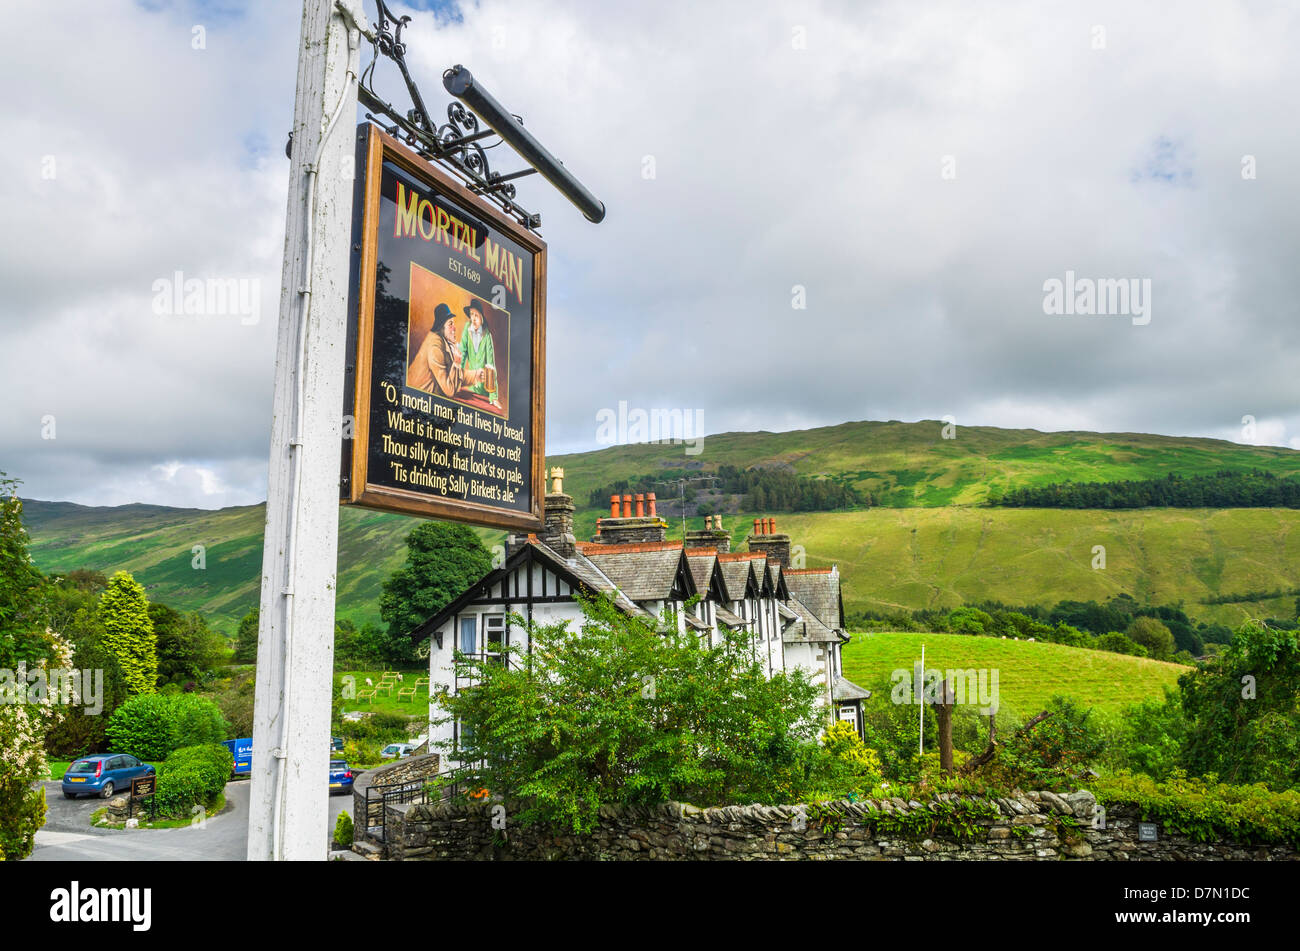 El hombre mortal Inn en Troutbeck, en el distrito de Los Lagos, cerca de Windermere, Cumbria, Inglaterra. Foto de stock